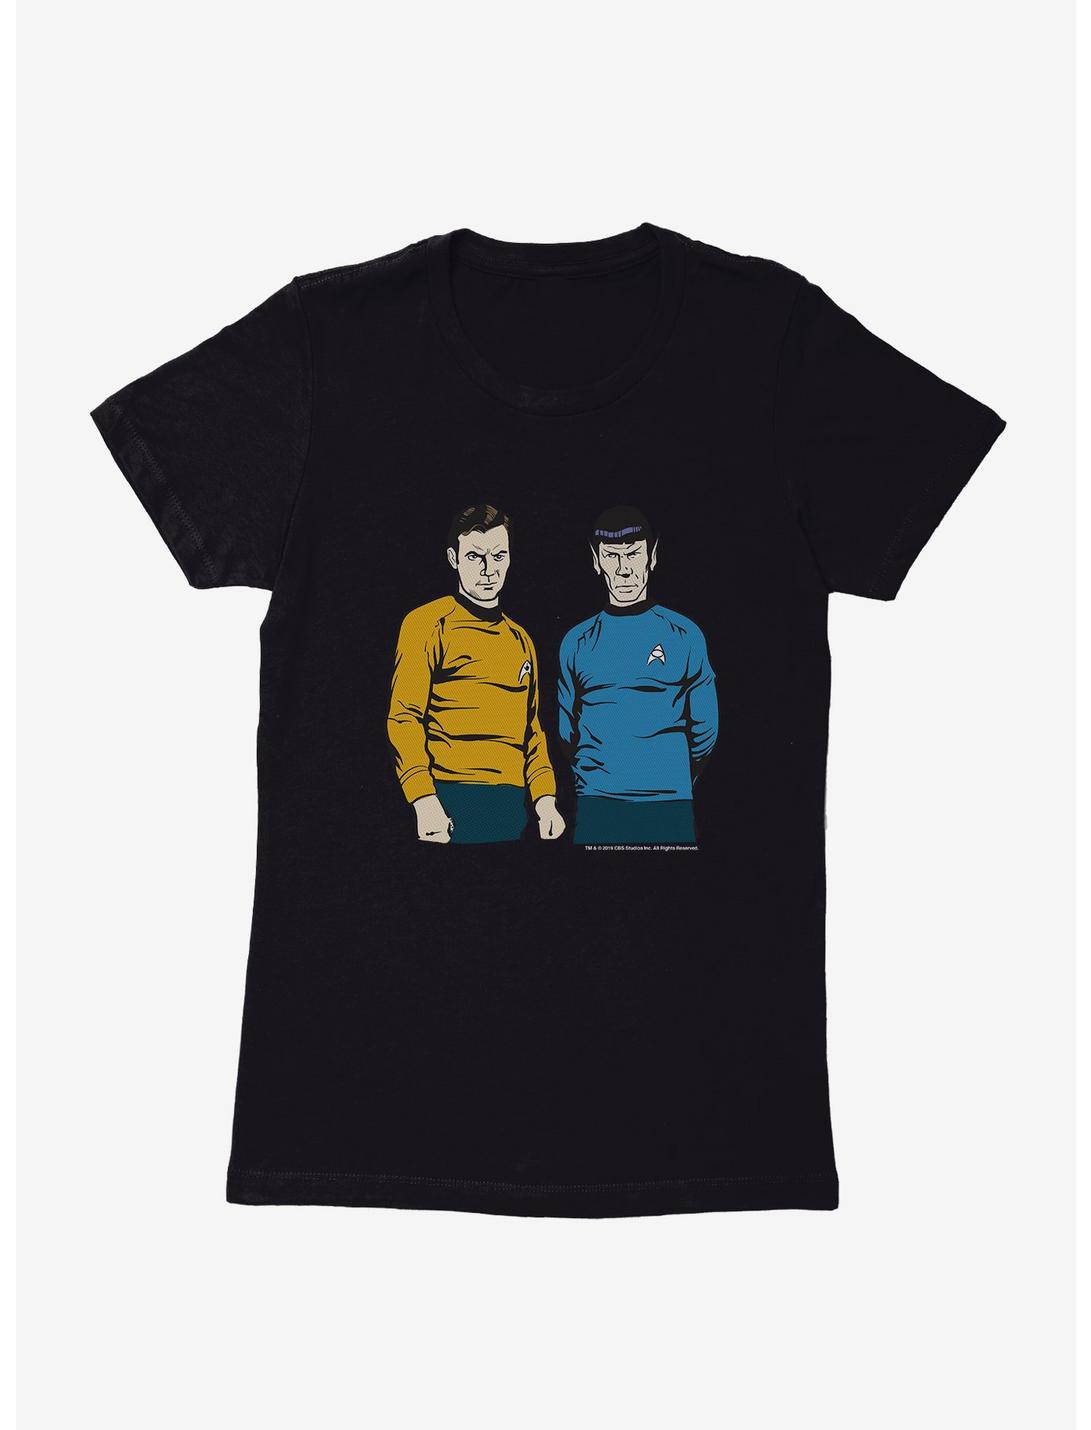 Star Trek Captain And Officer Womens T-Shirt, , hi-res